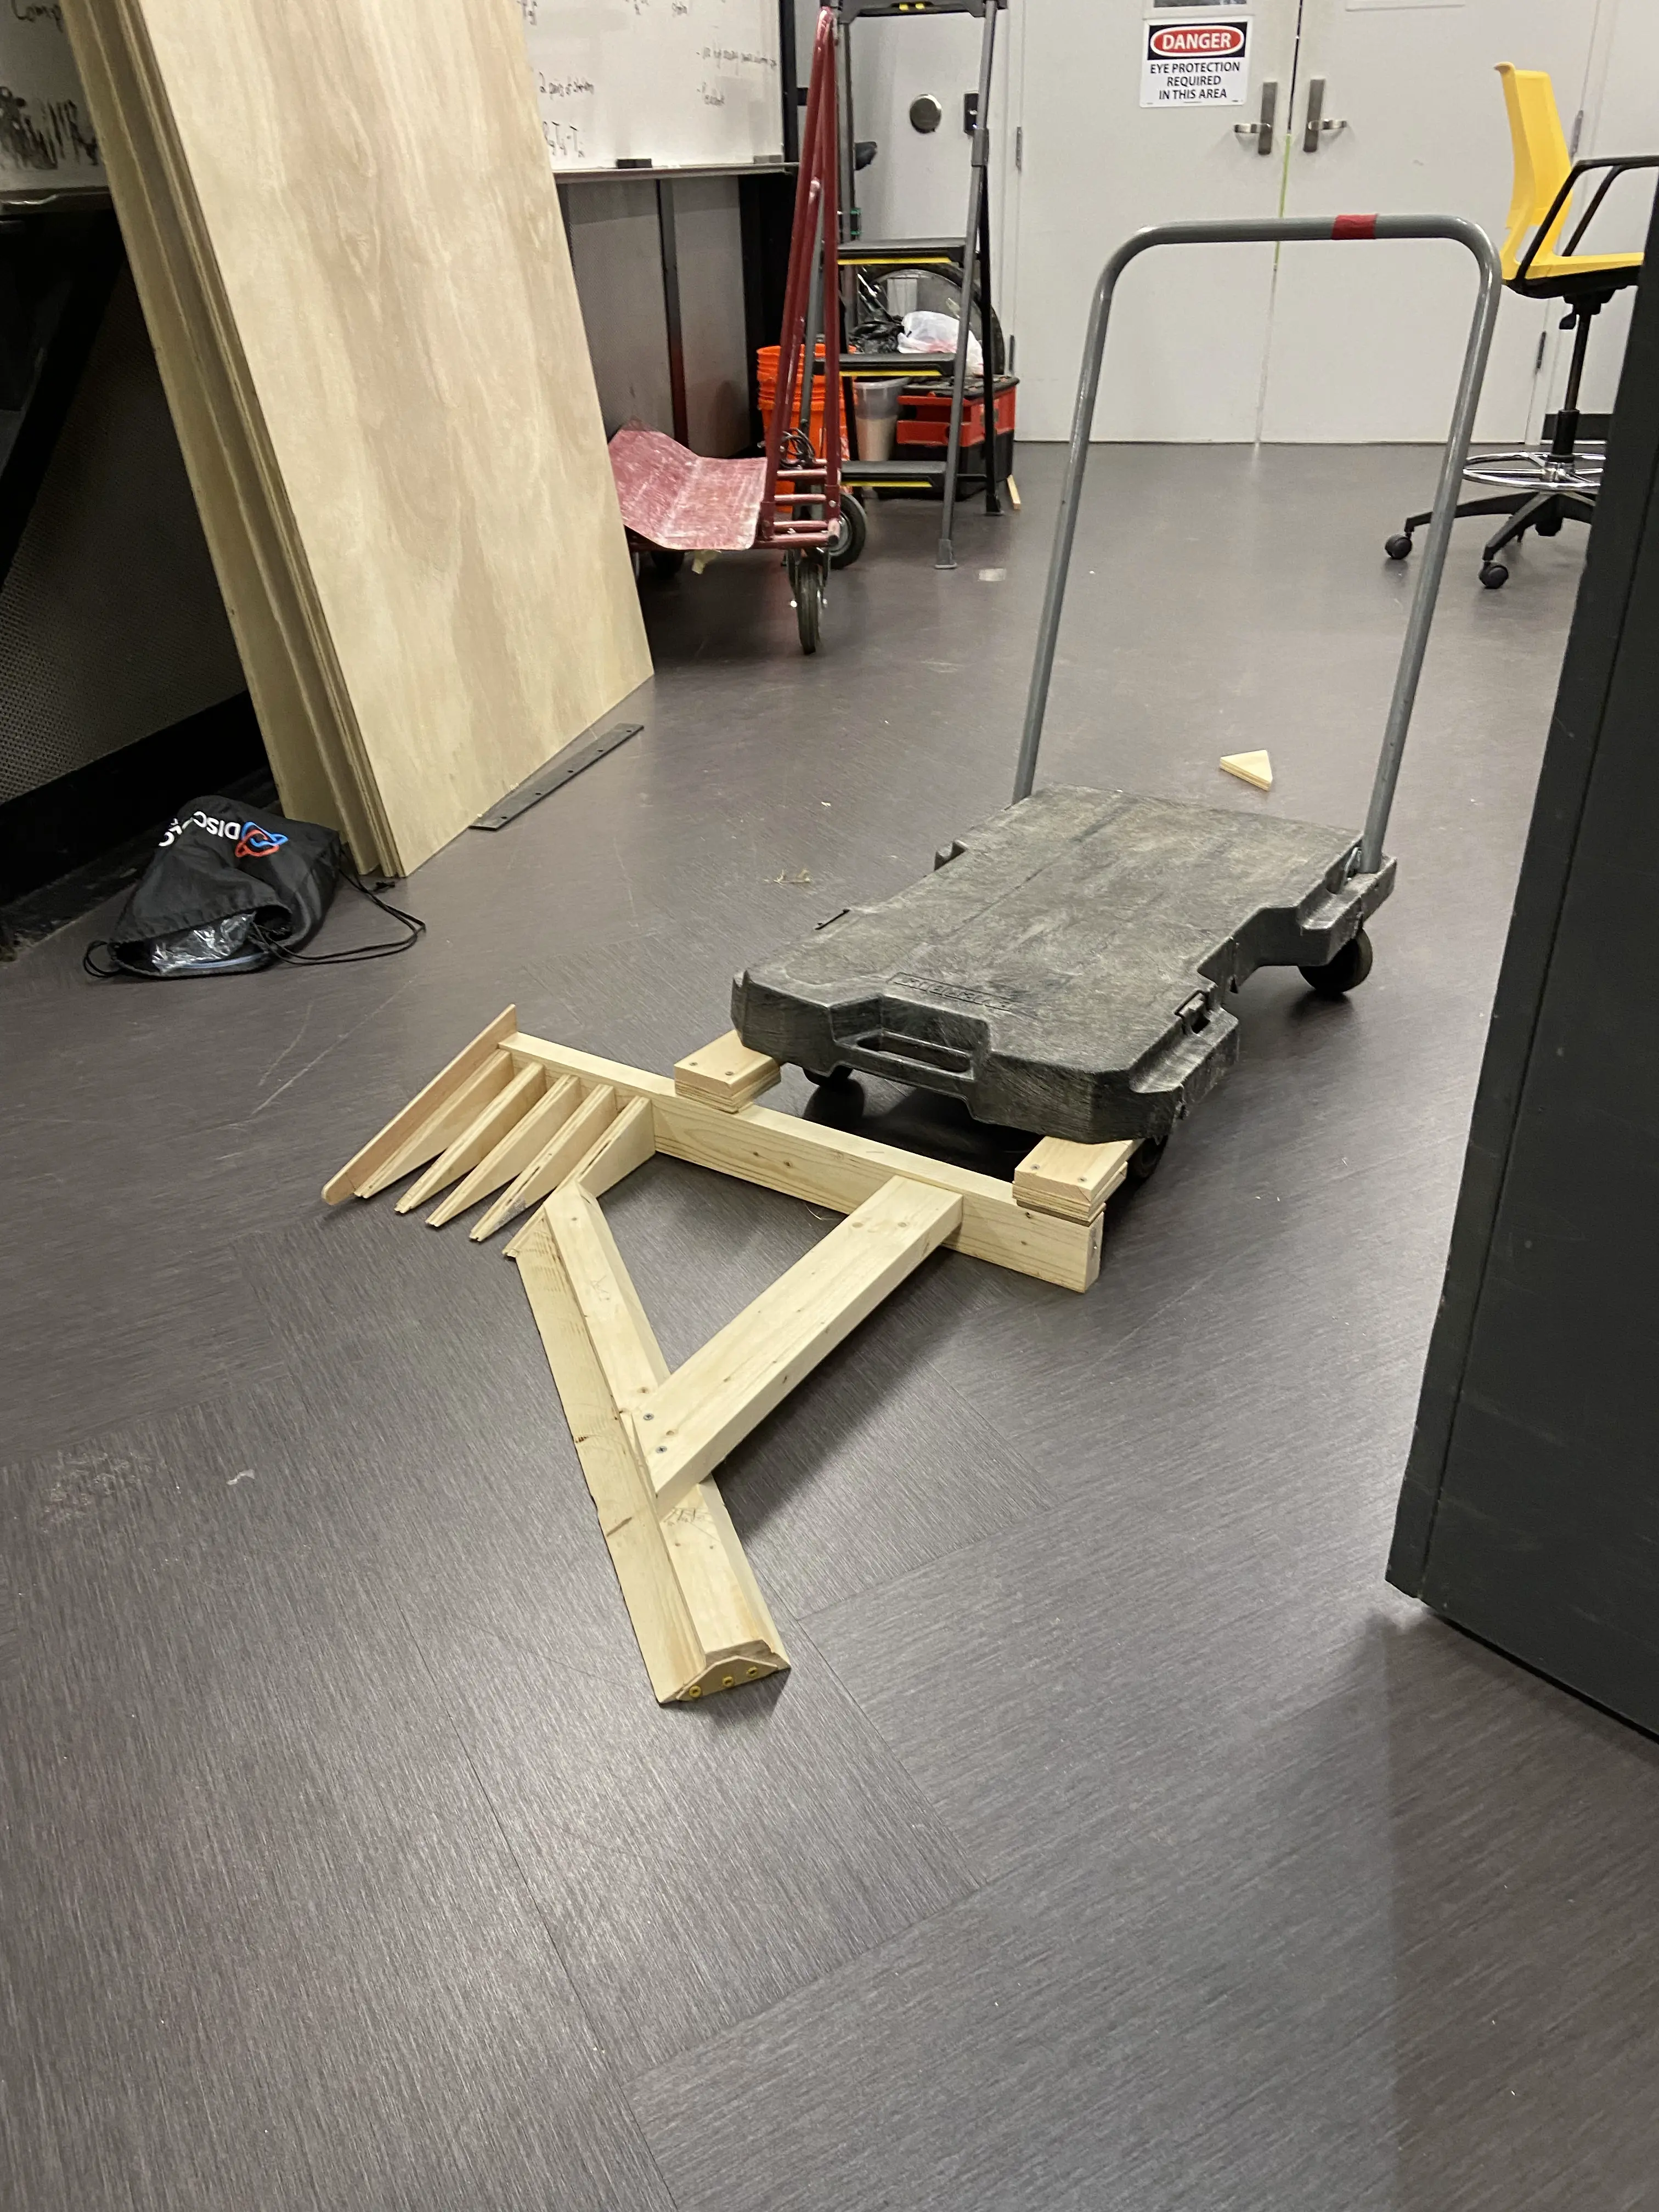 An awful wooden rake prototype